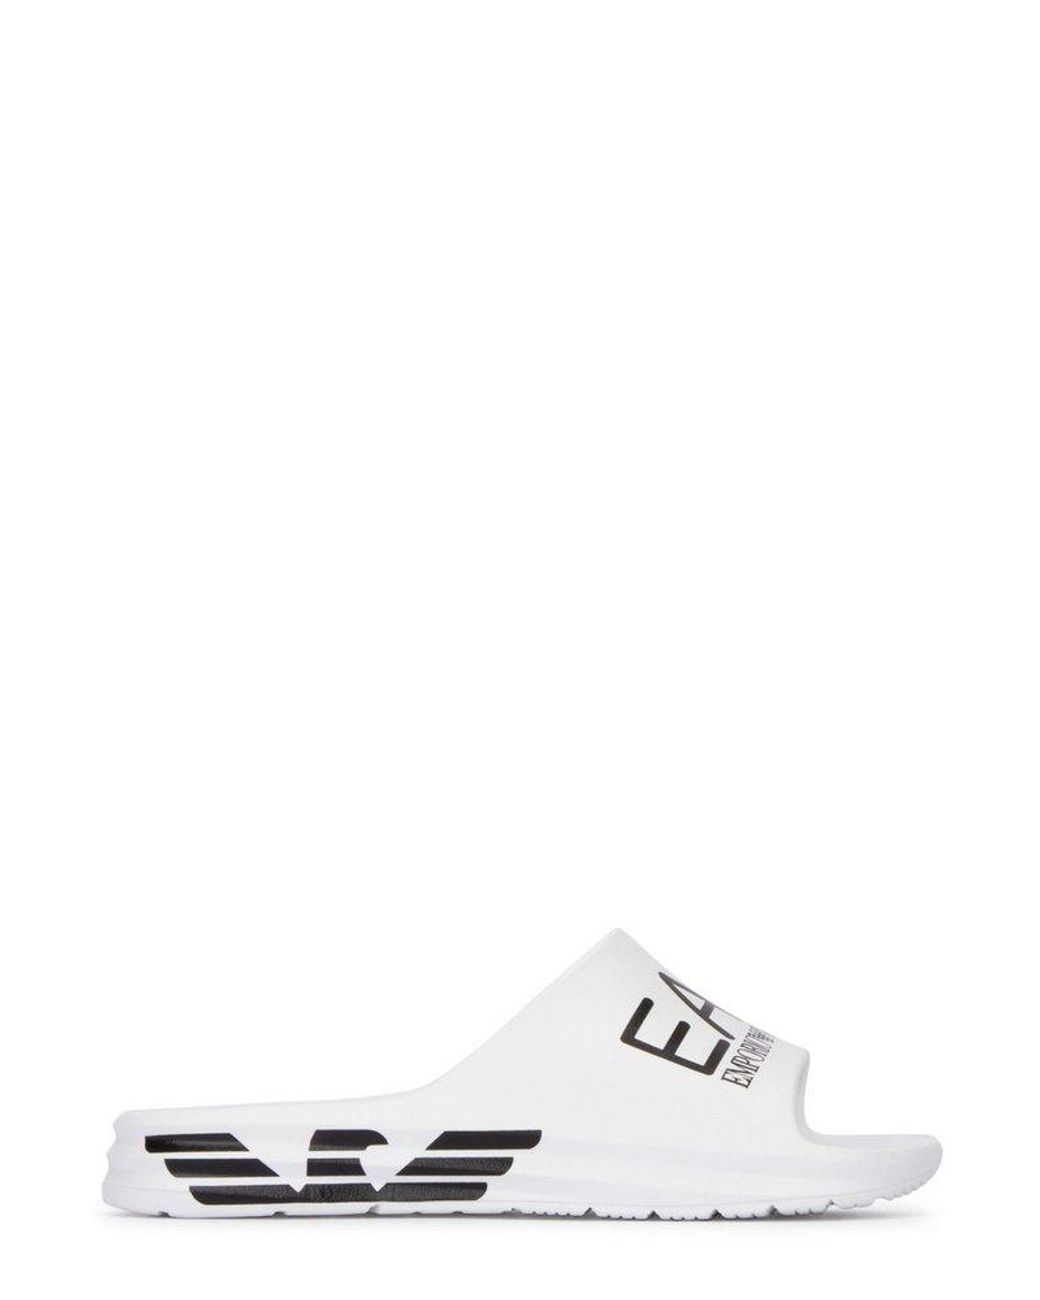 EA7 Logo Printed Slippers in White for Men | Lyst